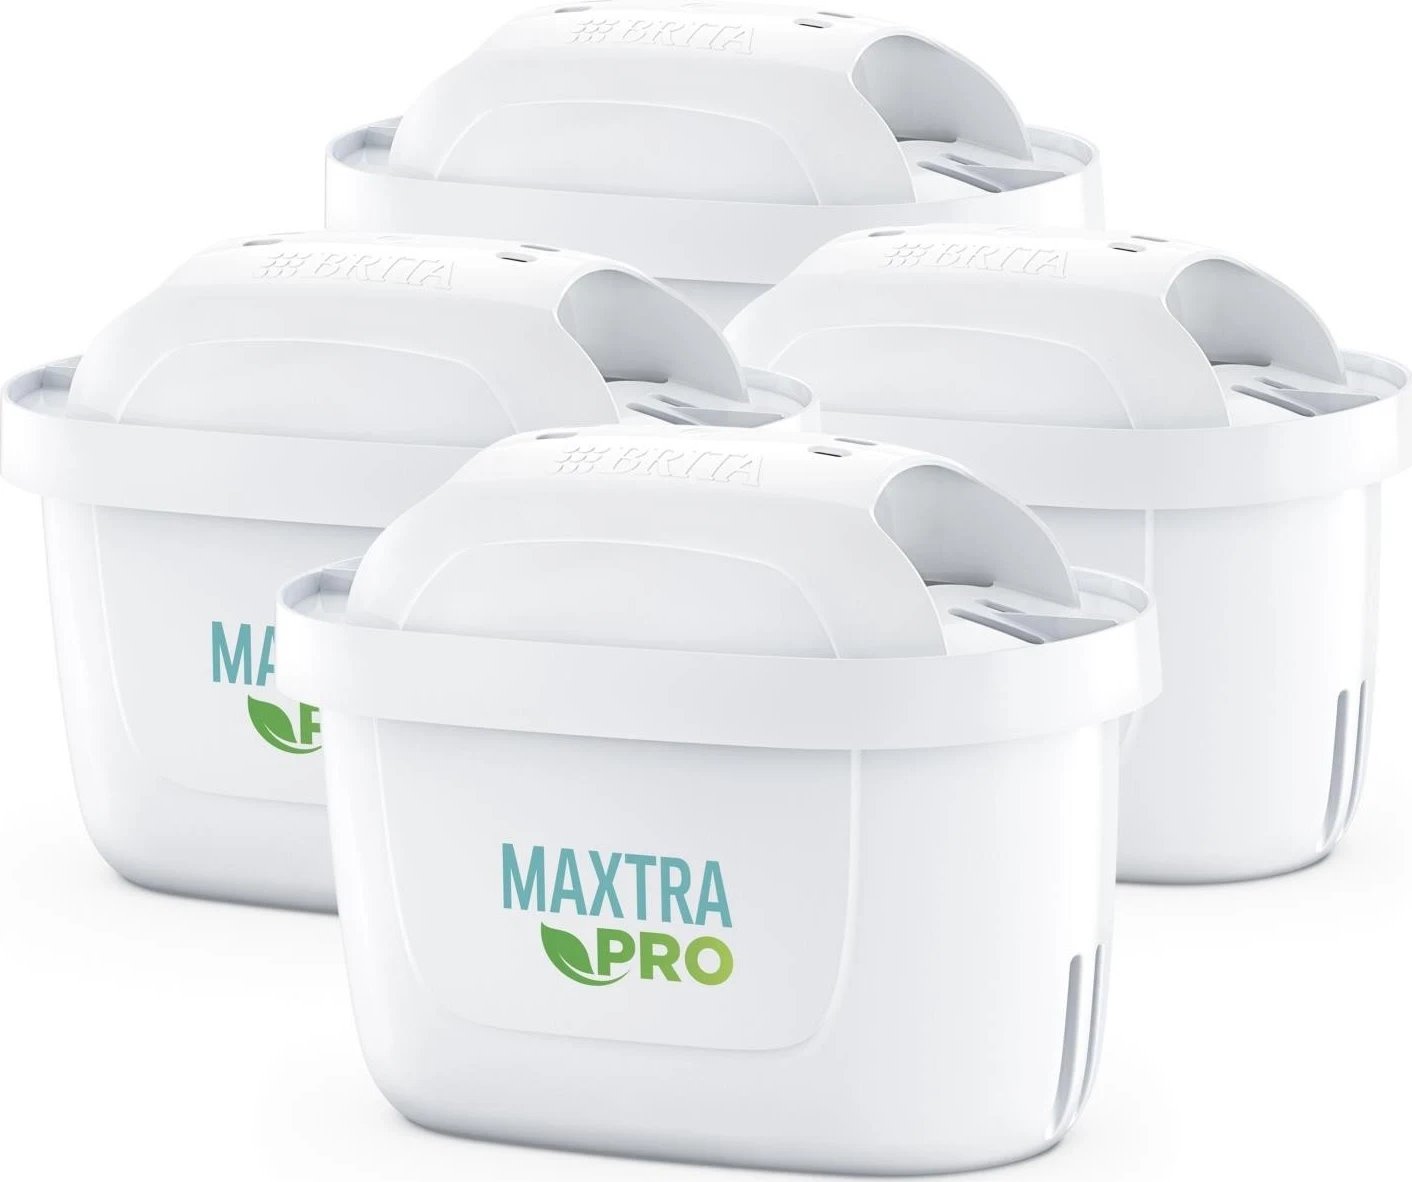 Filter Brita Maxtra Pro Pure Performance 3+1, e bardhë